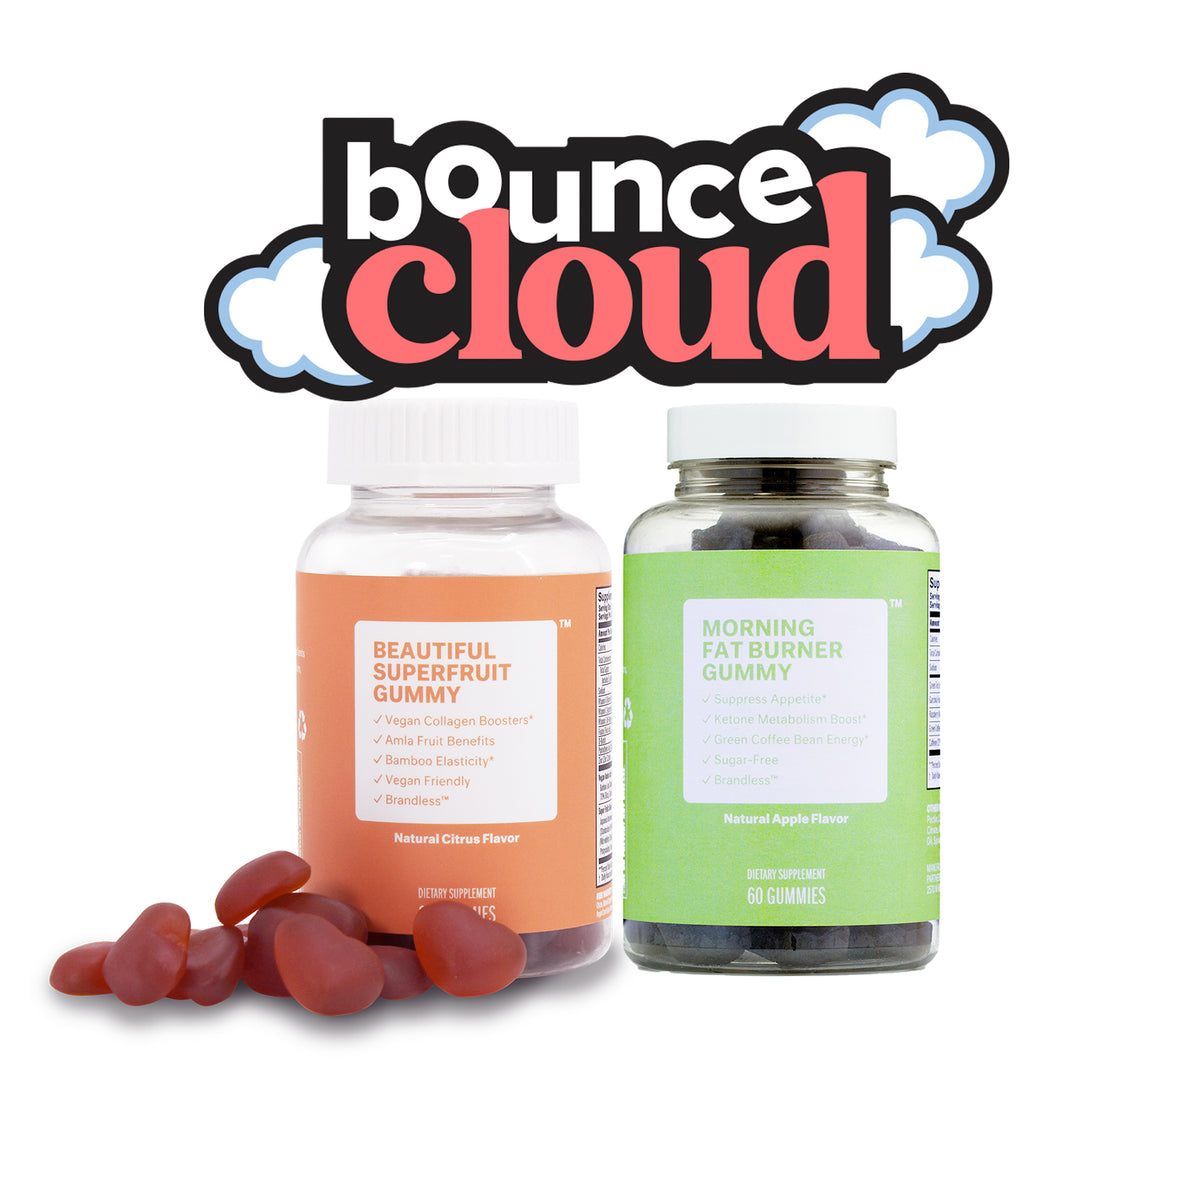 Bounce cloud gummy mashup: Beautiful Superfruit Gummy, Morning Fat Burner Gummy